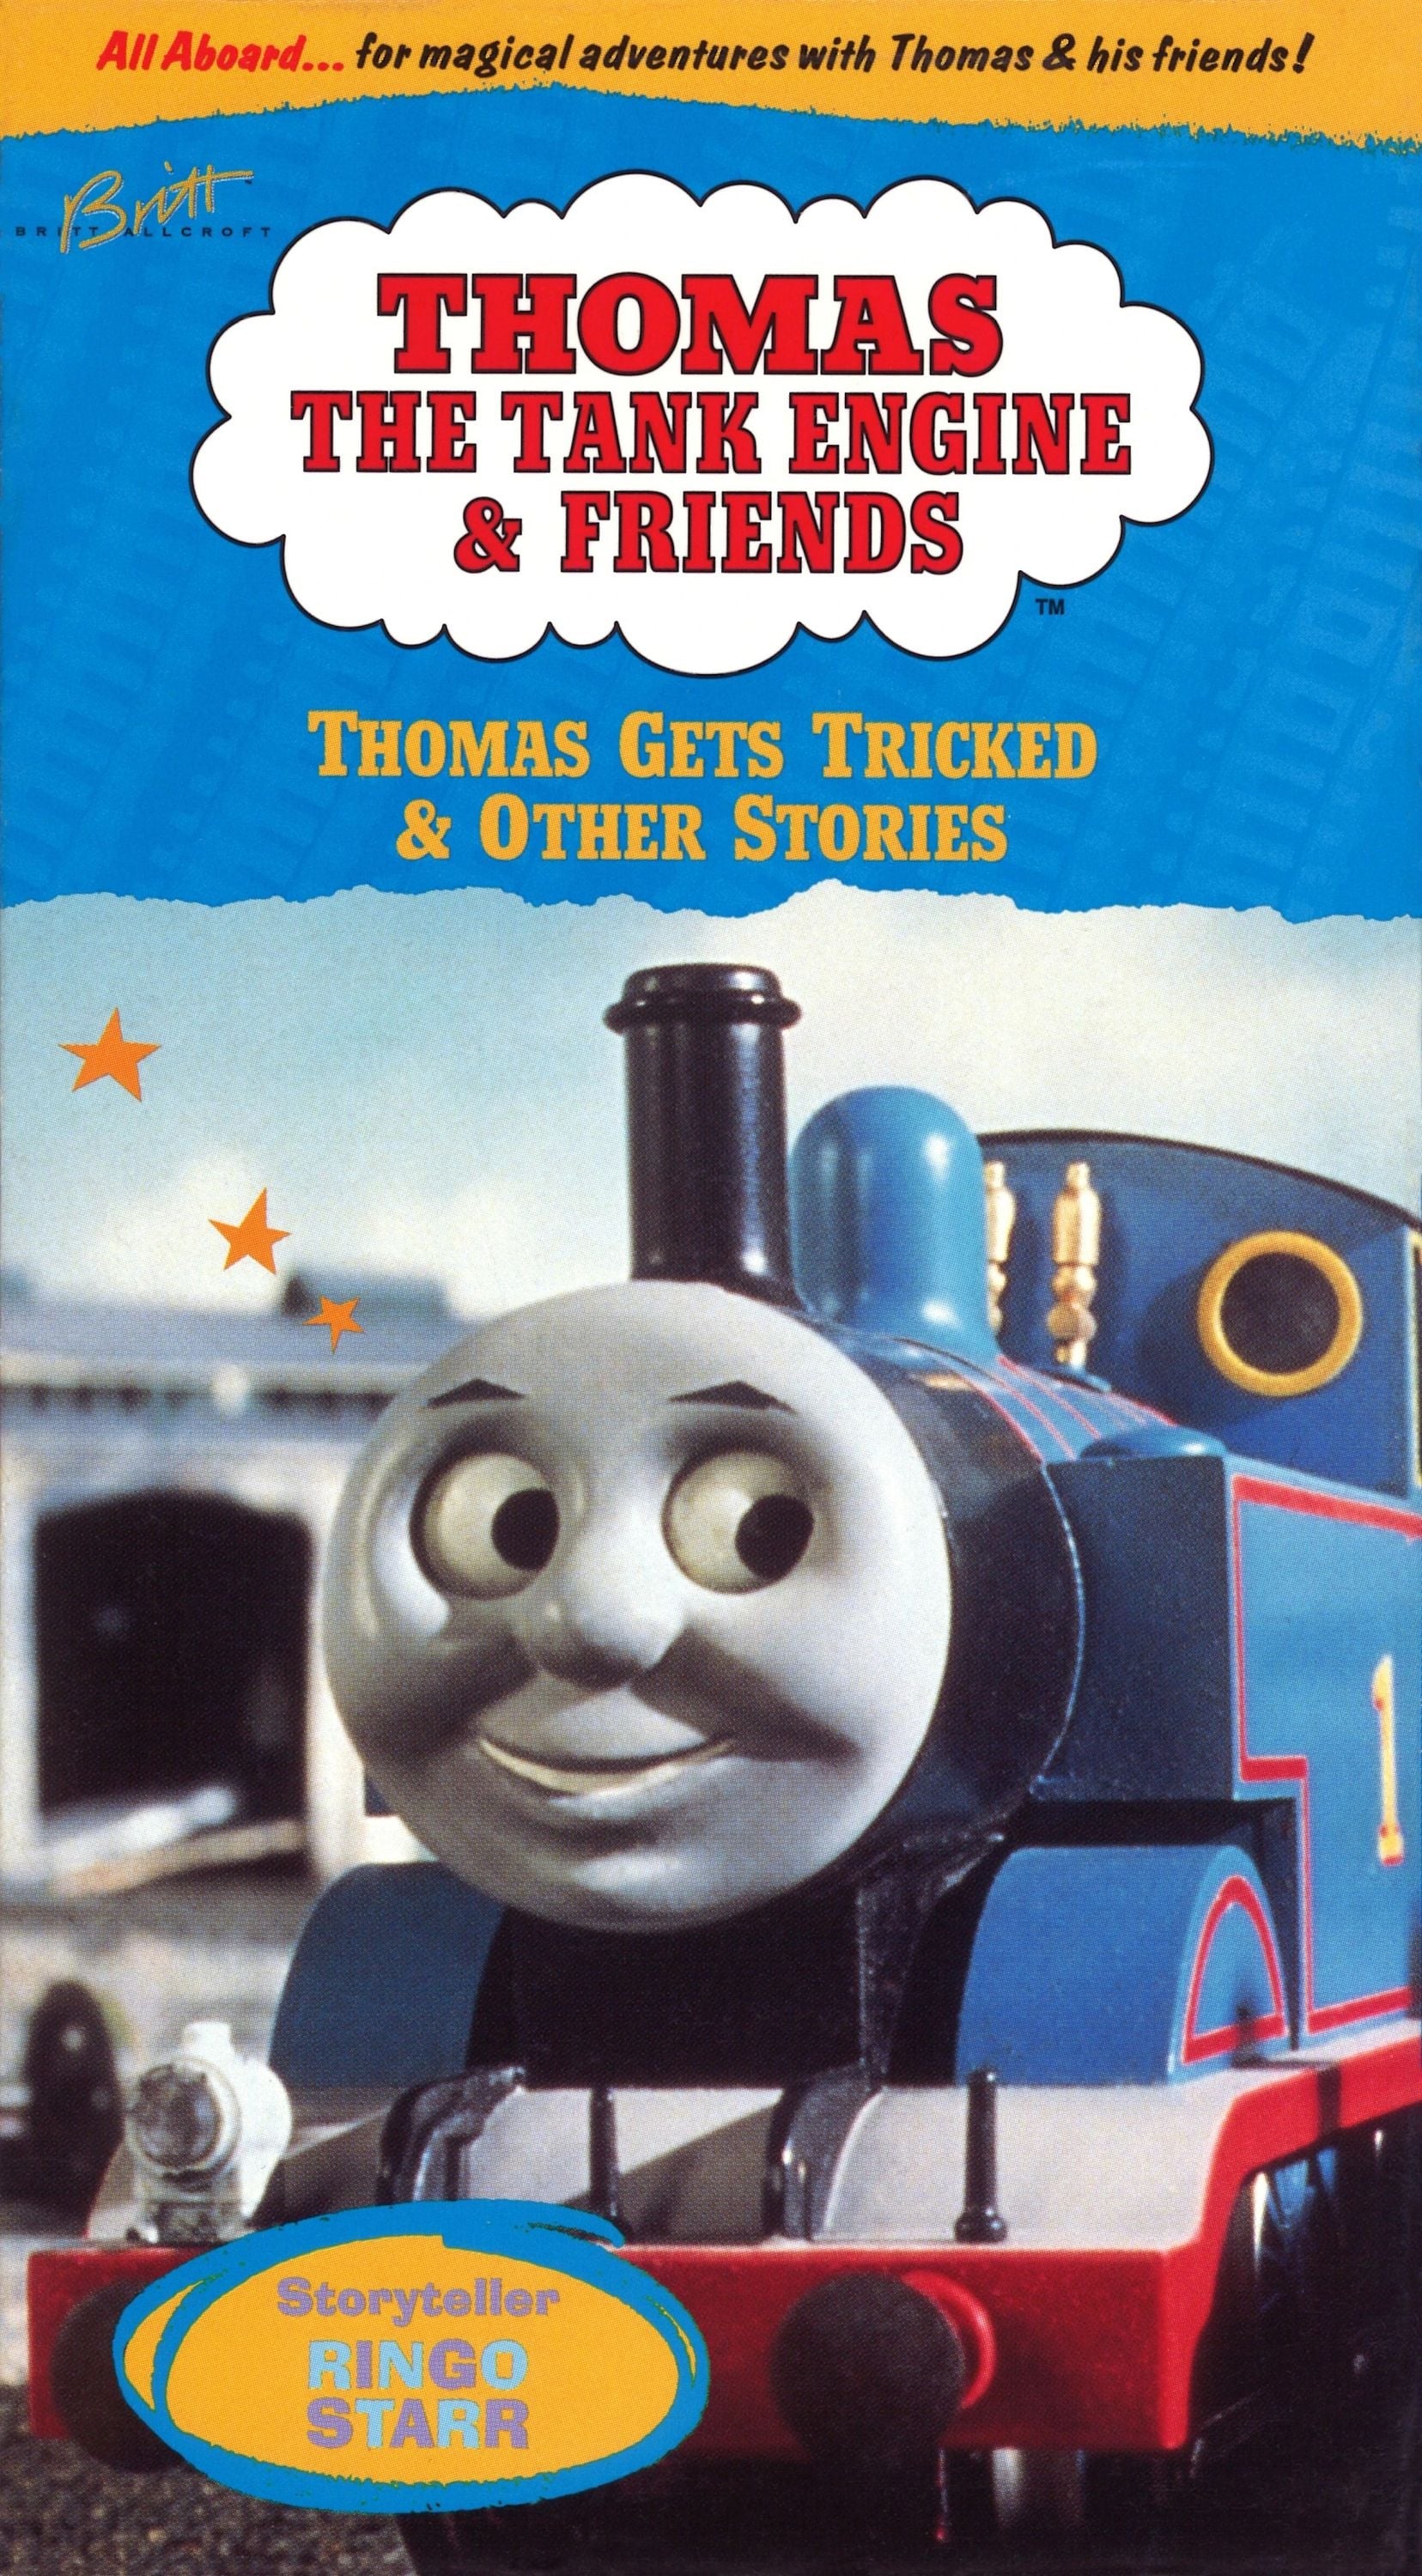 Thomas & Friends: Thomas Gets Tricked (1990)